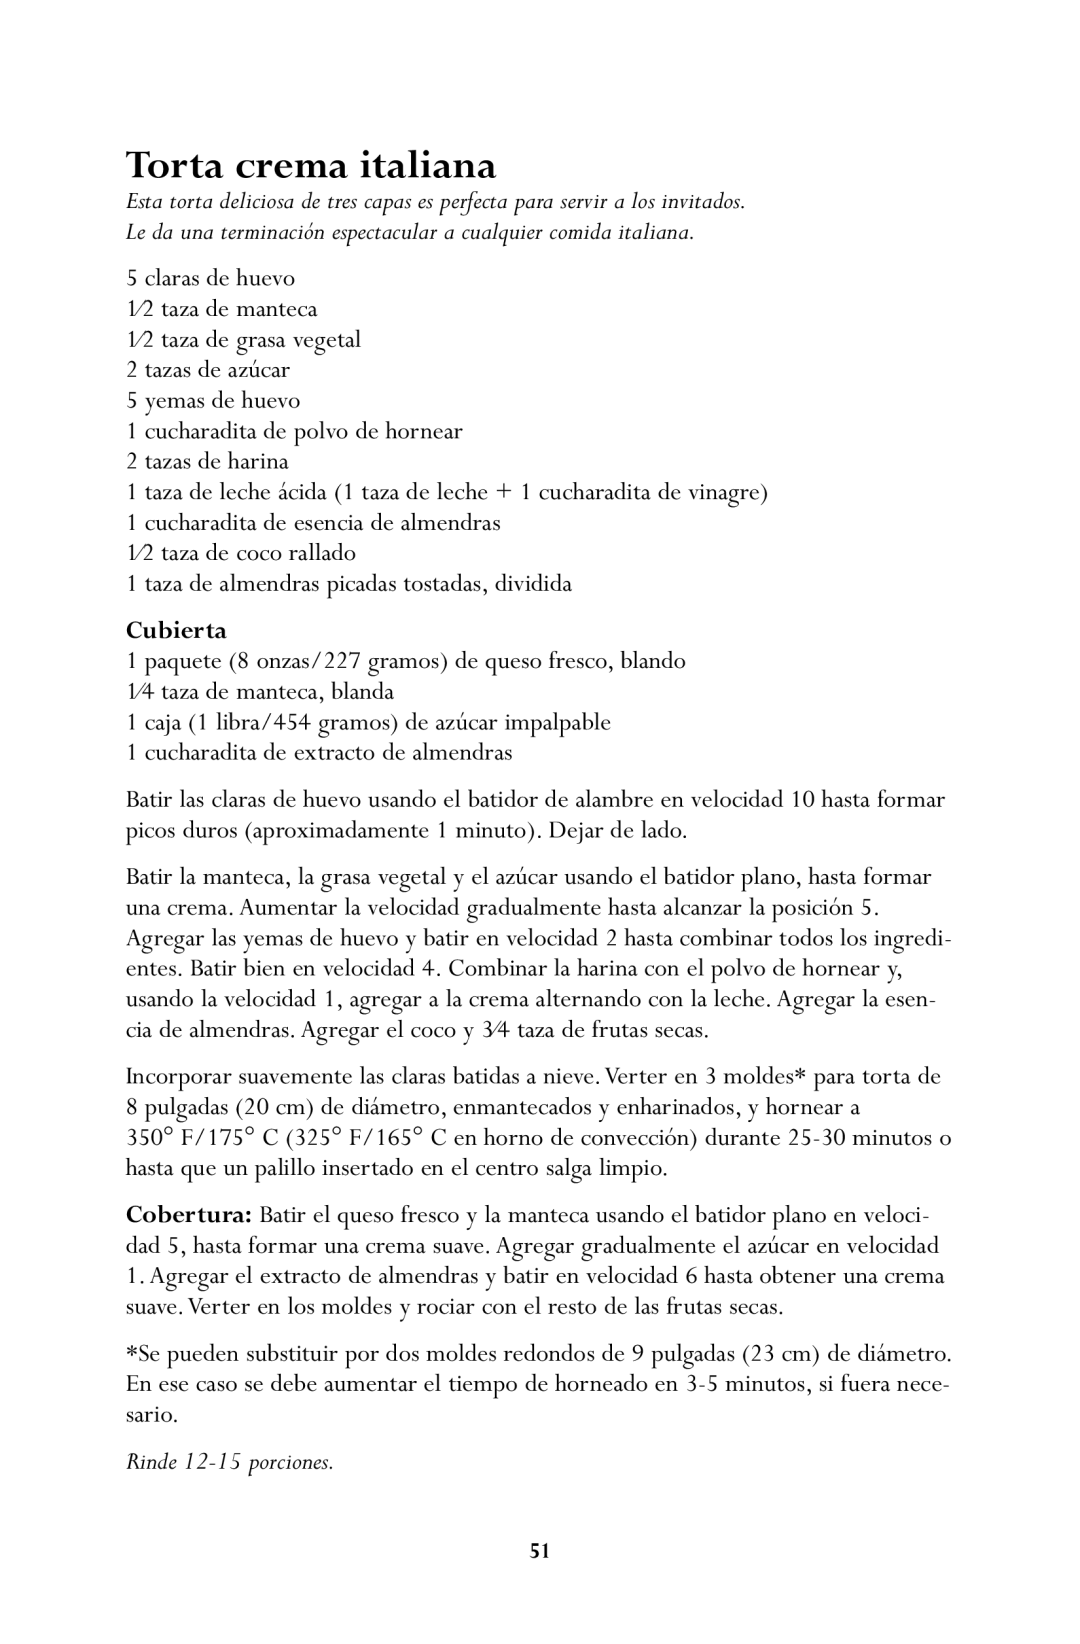 Jenn-Air JSM900 manual Torta crema italiana, Cubierta, Rinde 12-15porciones 